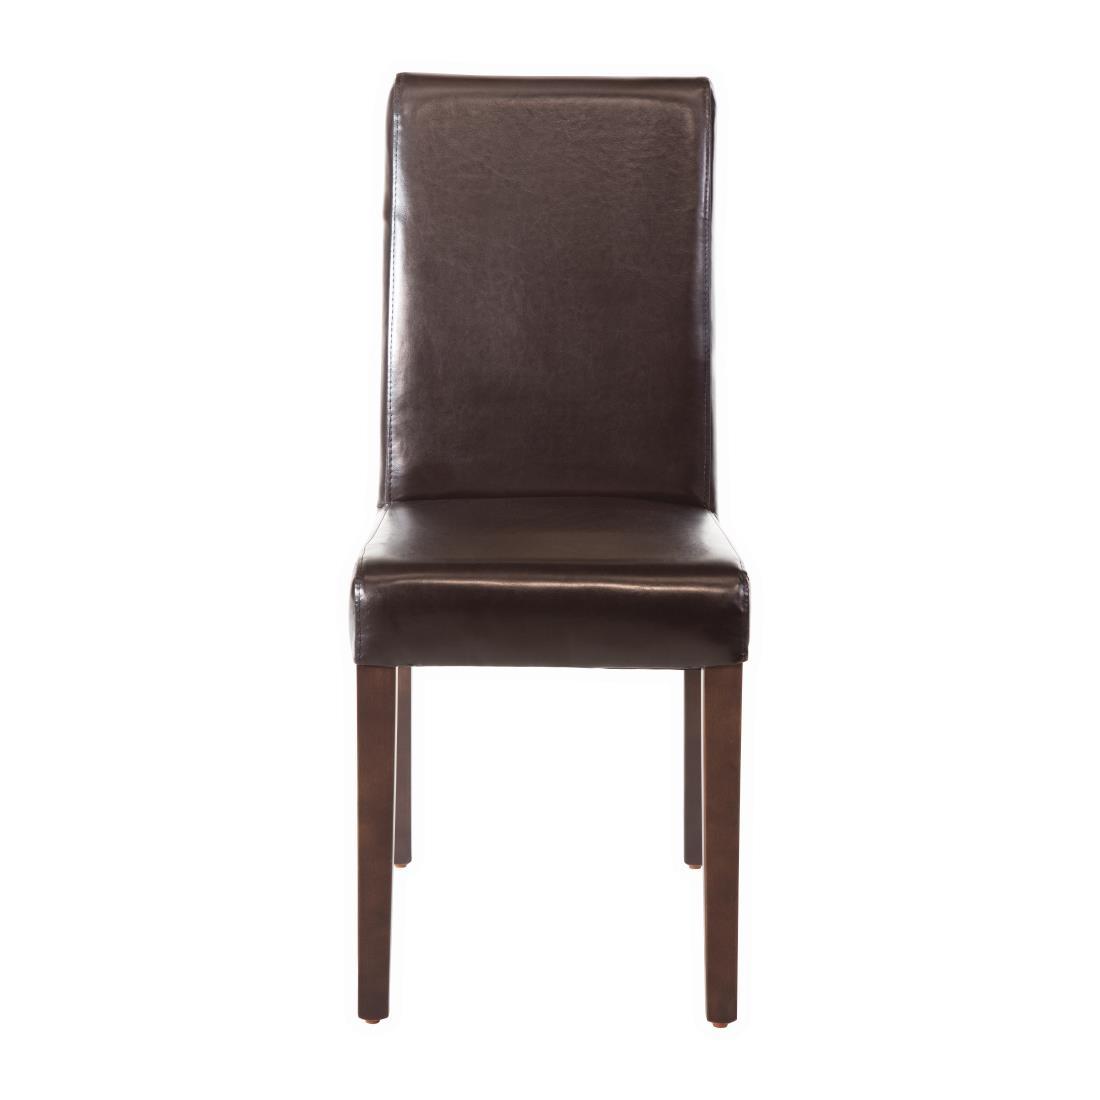 Bolero Faux Leather Dining Chair Dark Brown (Box 2) - GF955  - 2